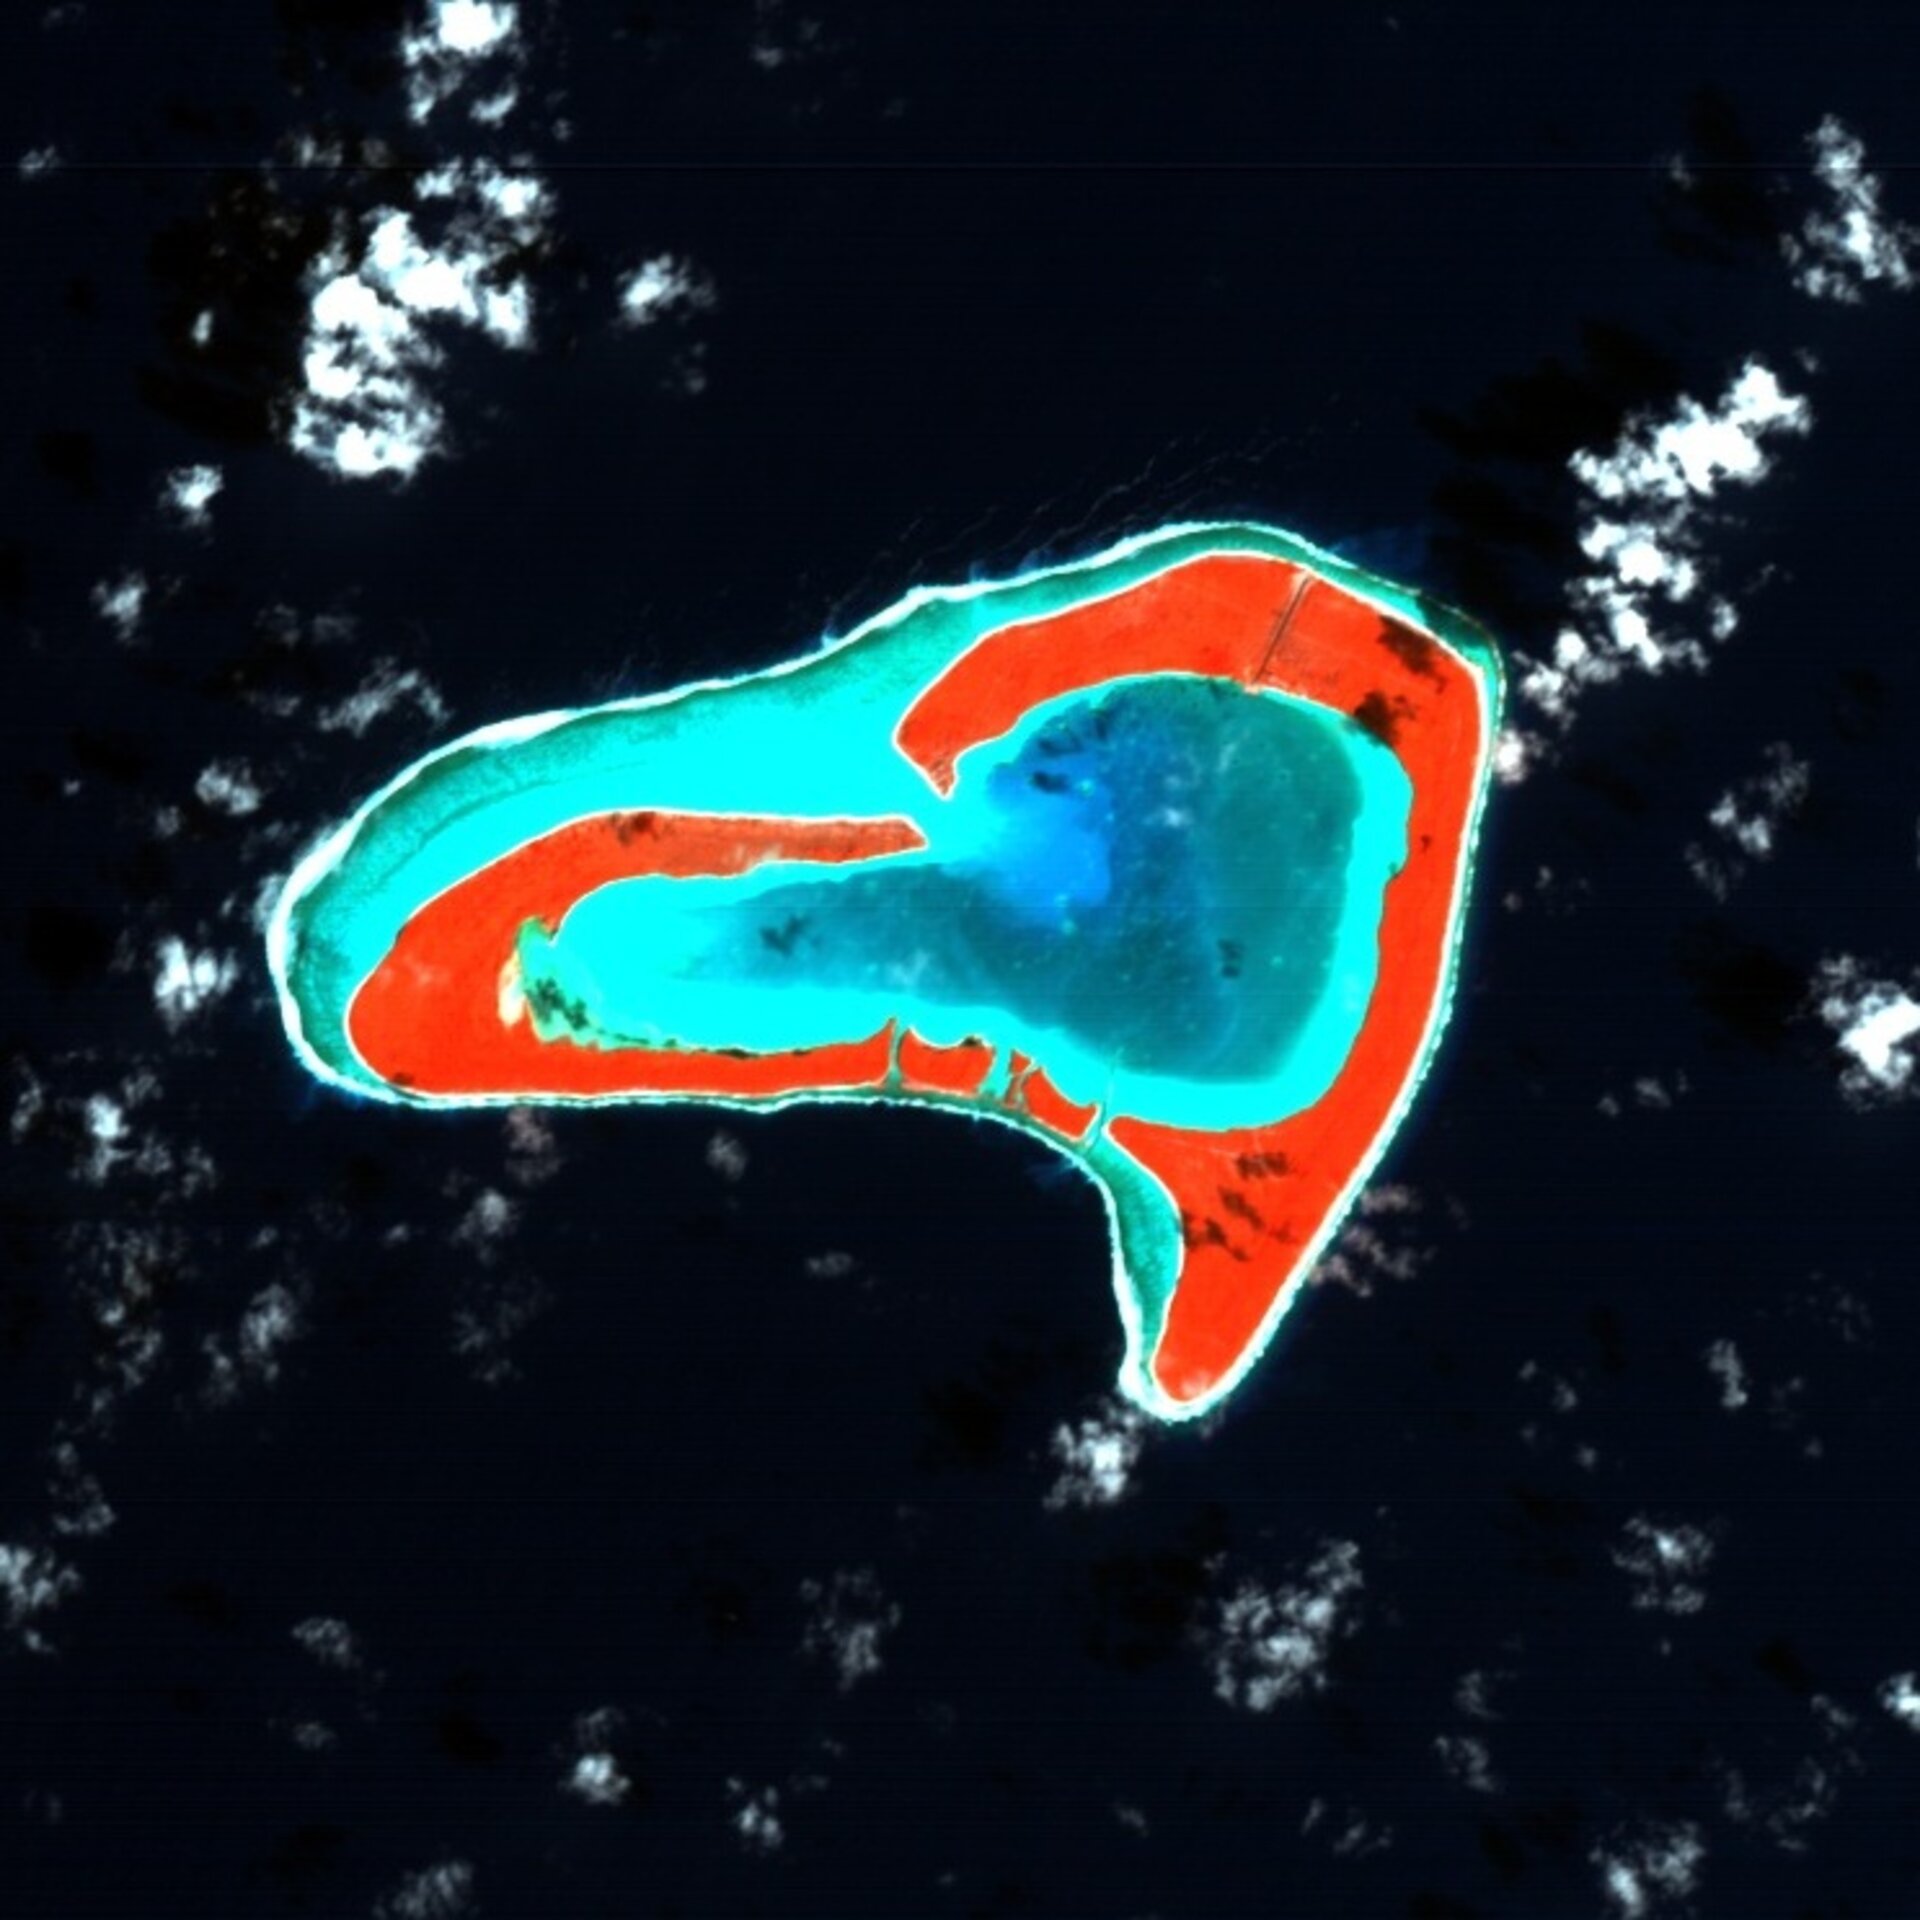 Tupai island: Heart of the Pacific